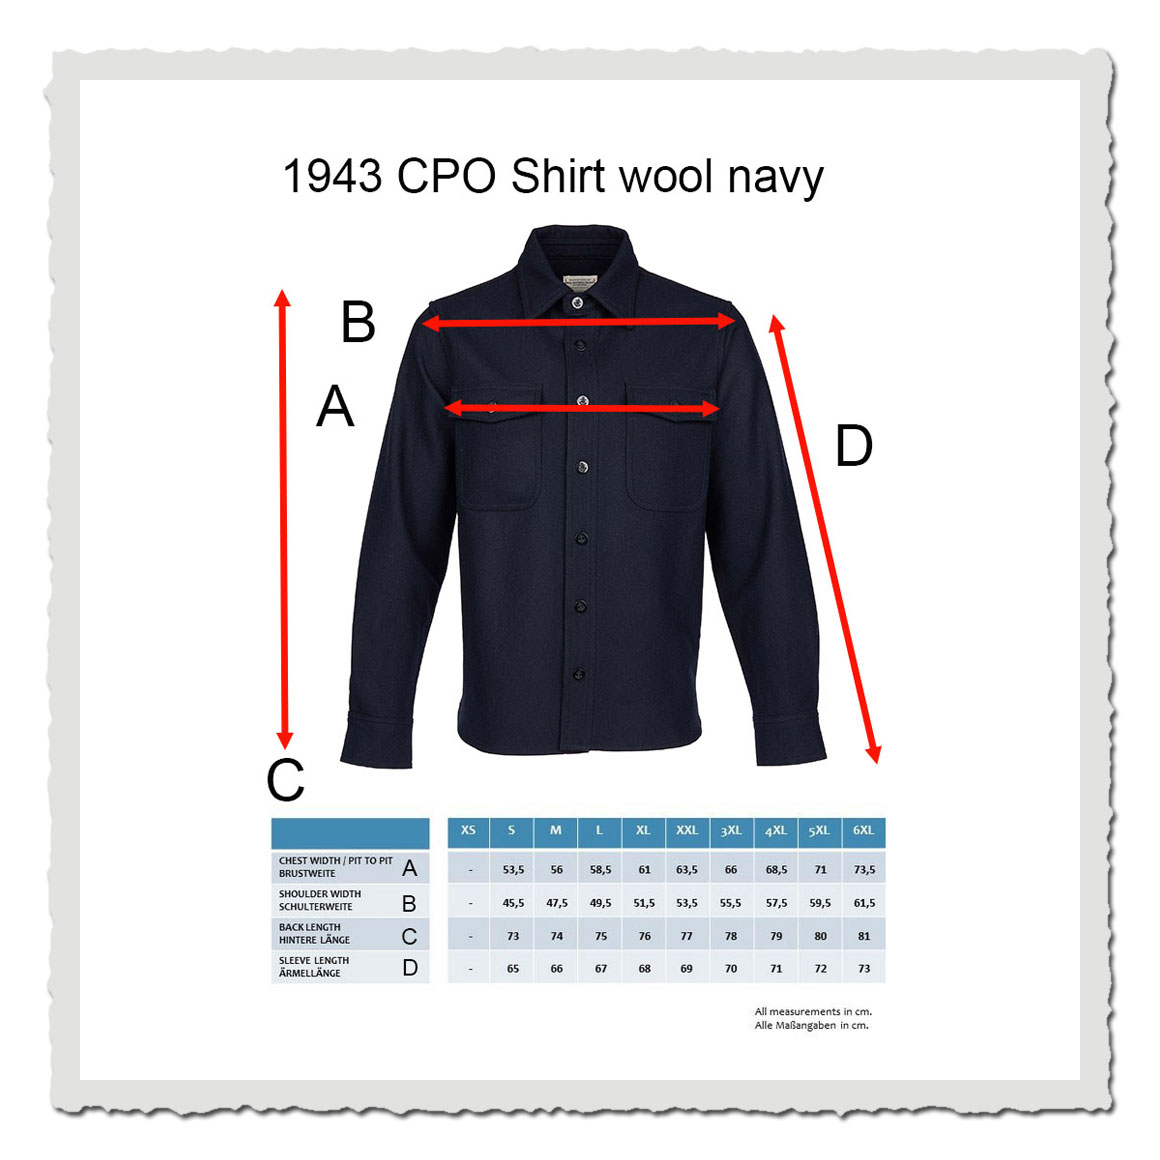 1943 CPO Shirt navy wool